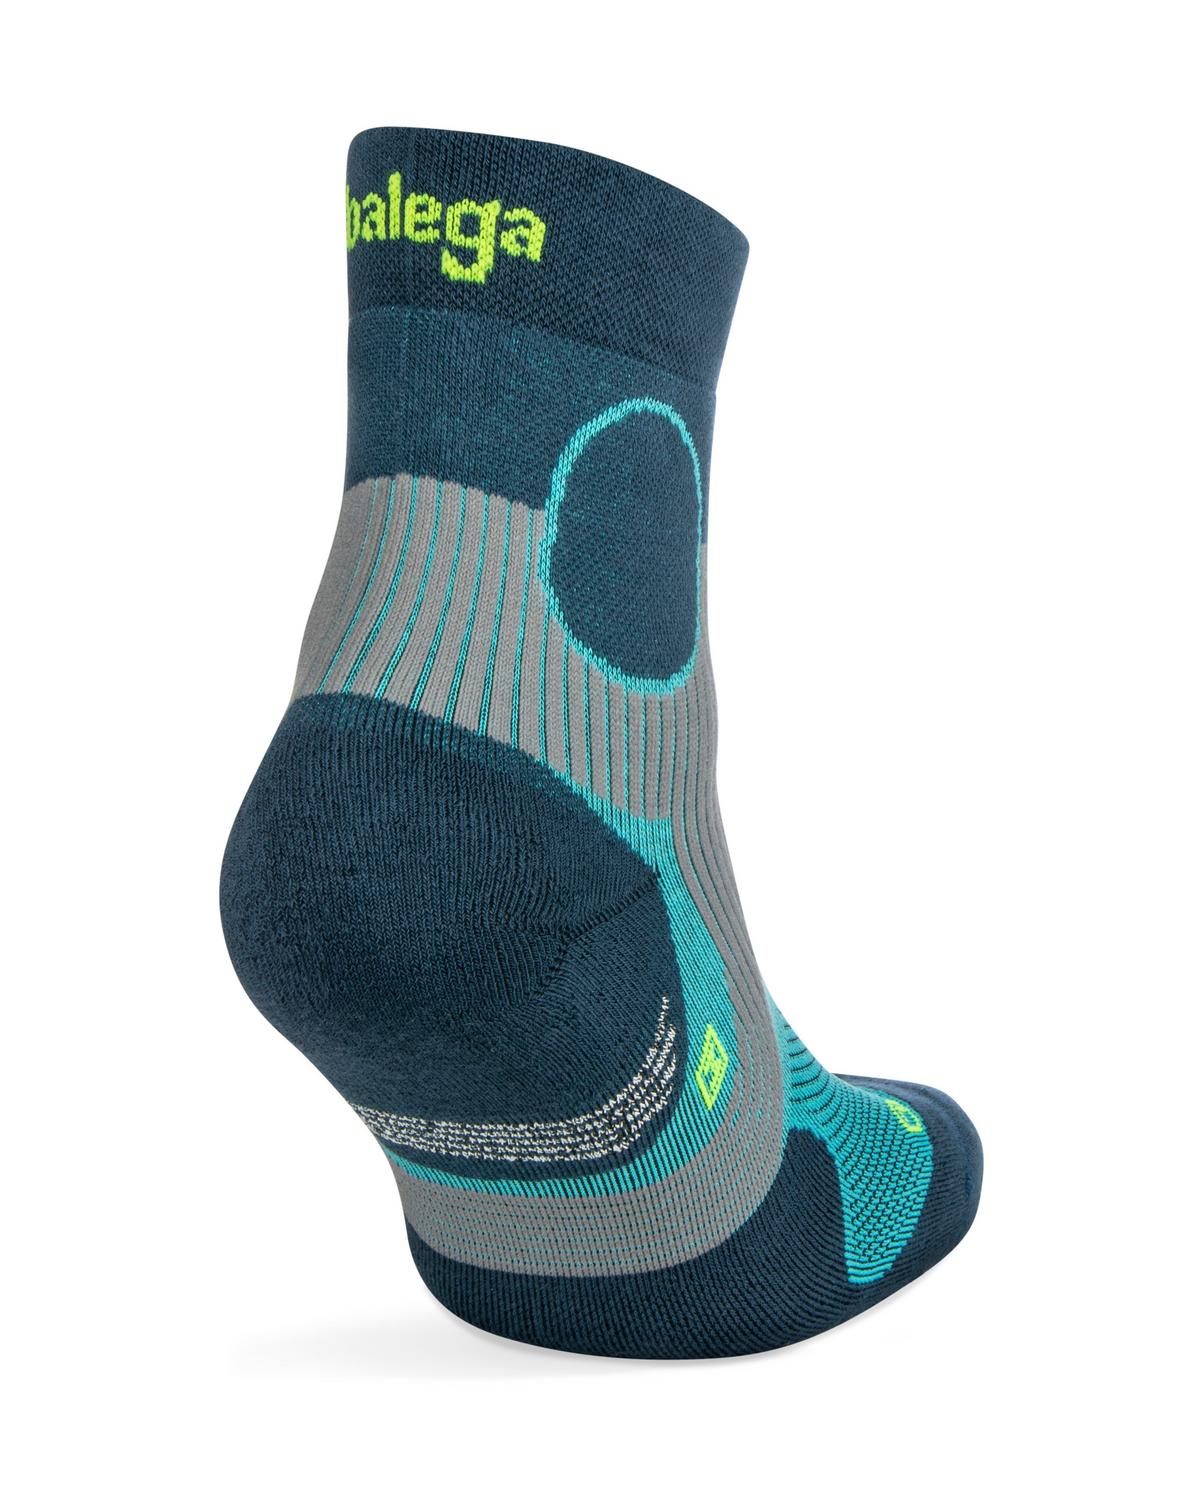 Balega Support Crew Socks  -  Teal